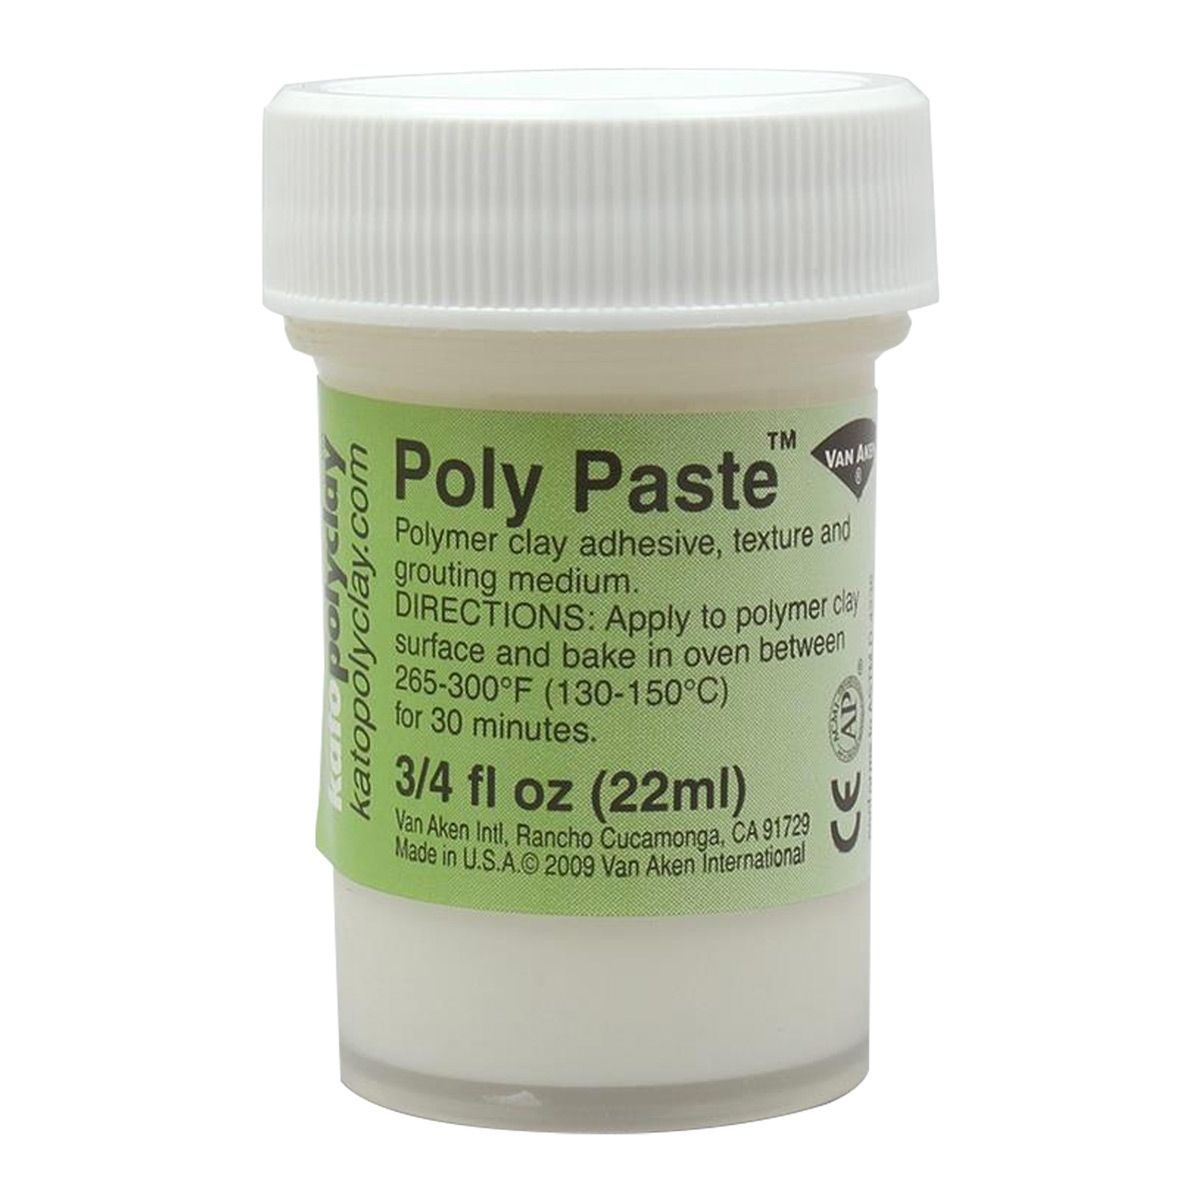 Polypaste Polymer Glue